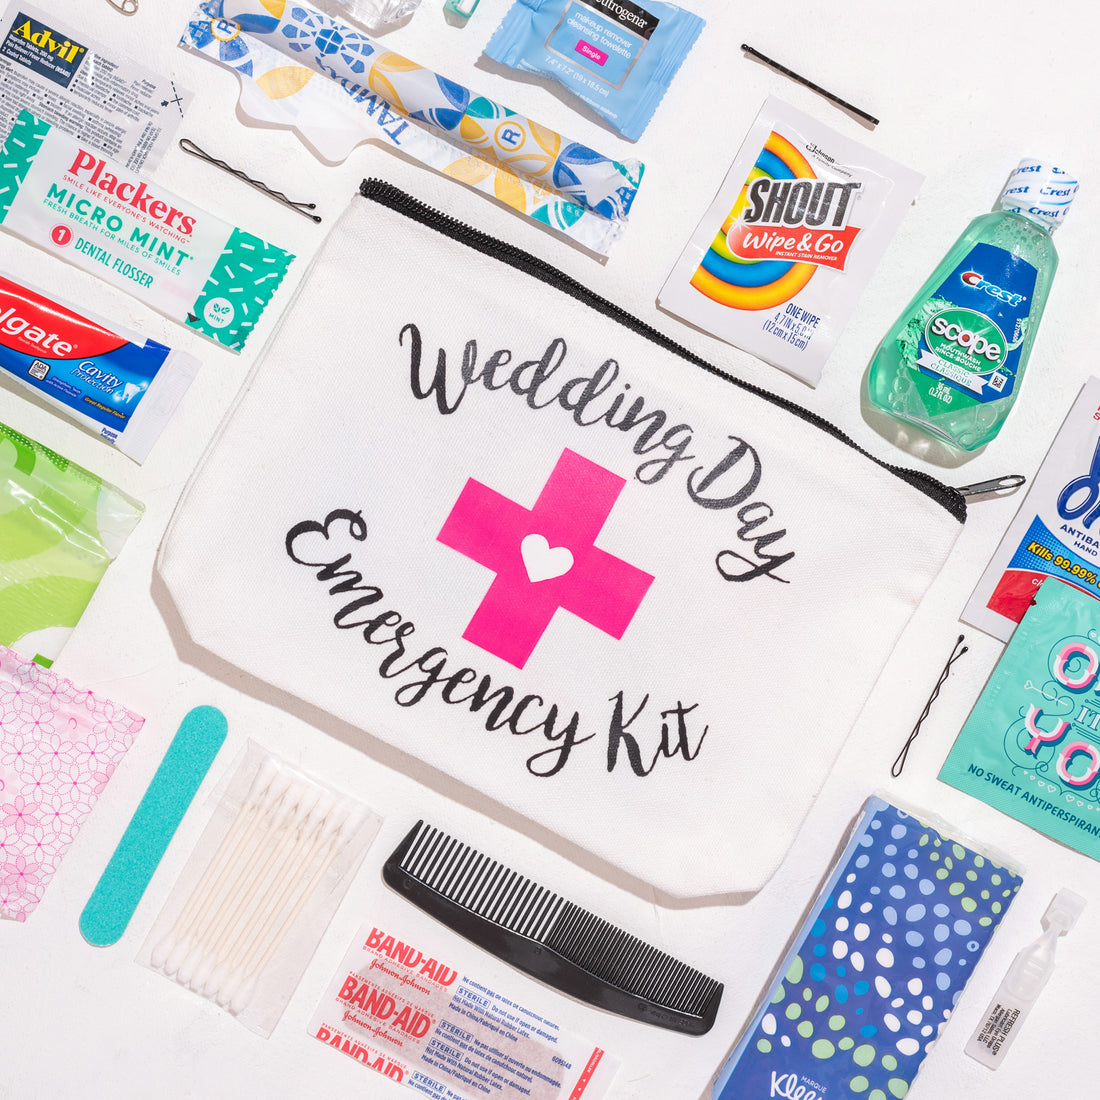 The Wedding Day Emergency Kit